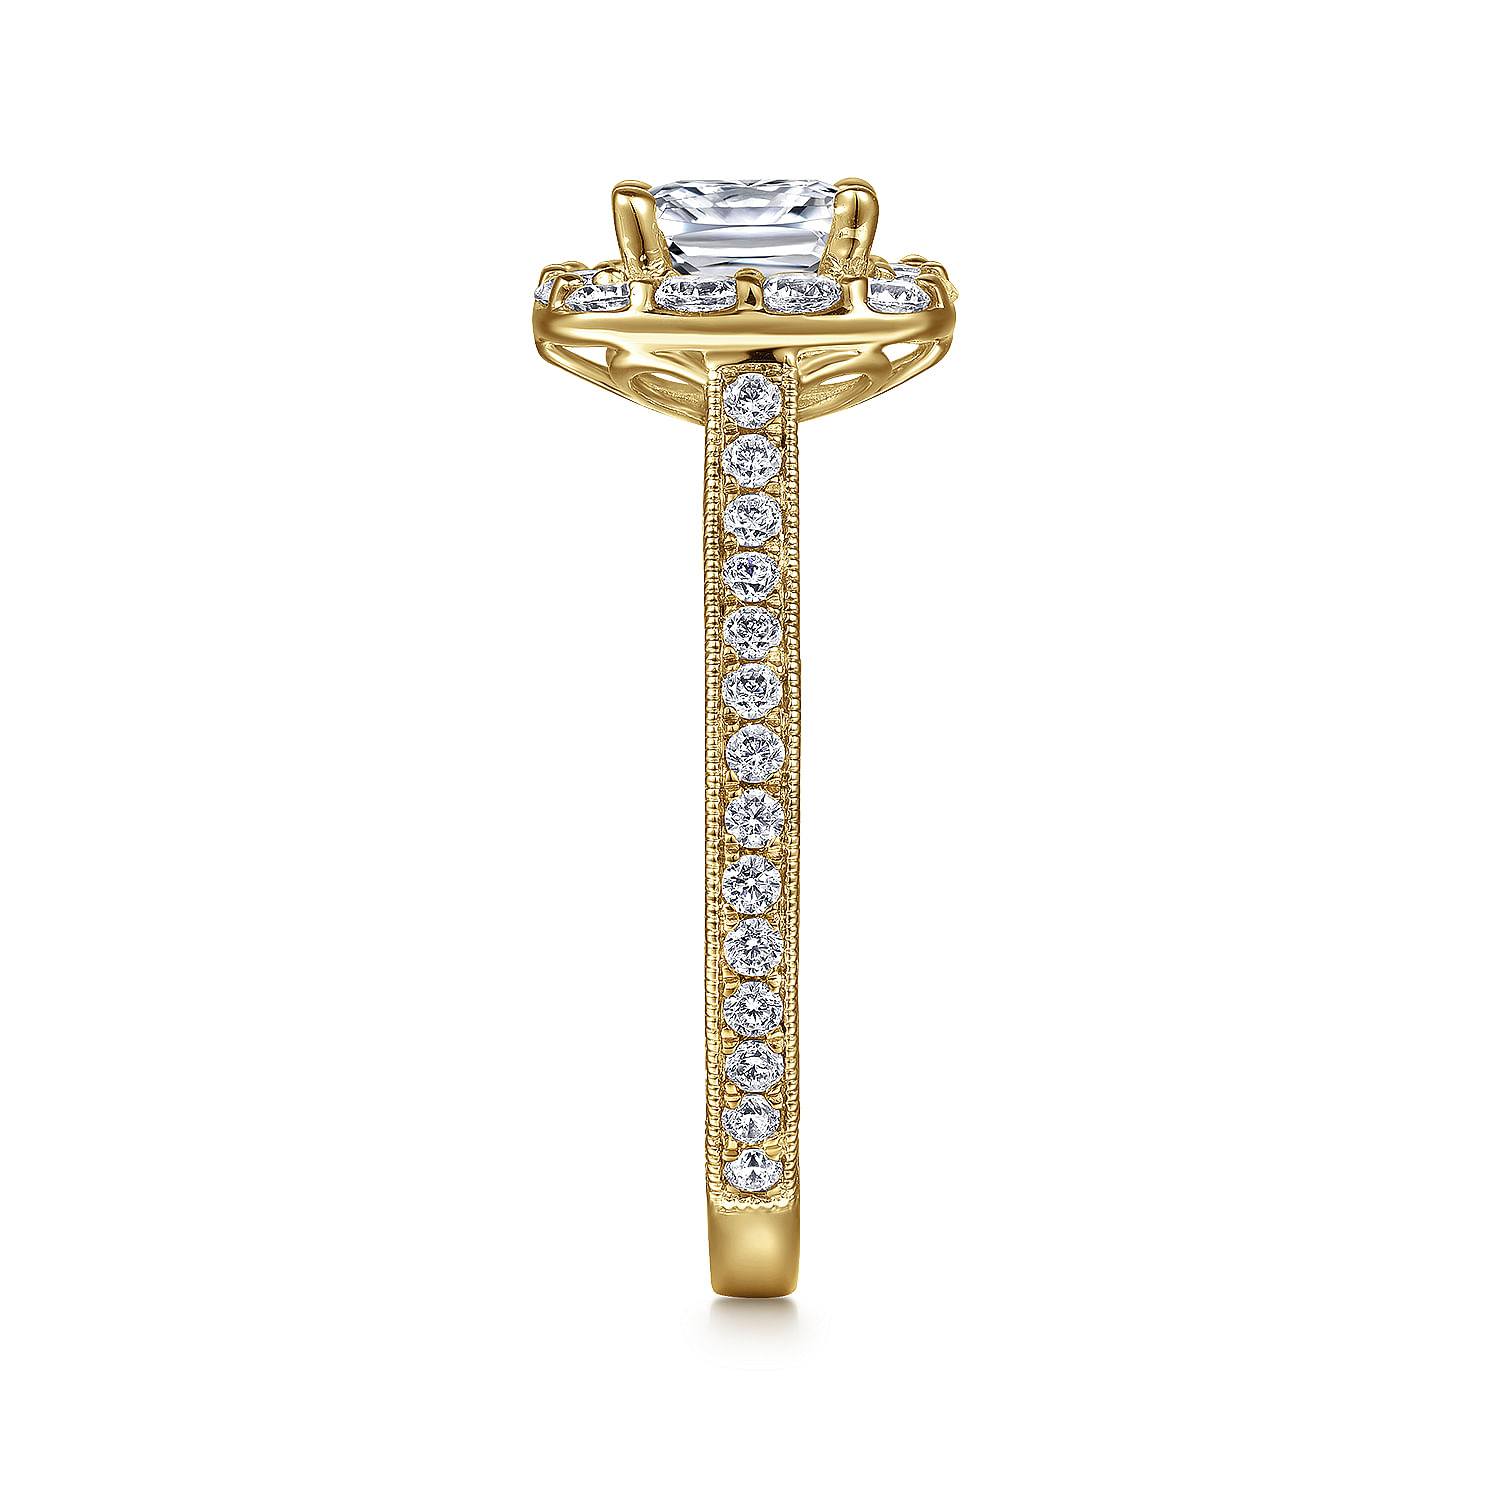 Vintage Inspired 14K Yellow Gold Cushion Halo Diamond Engagement Ring